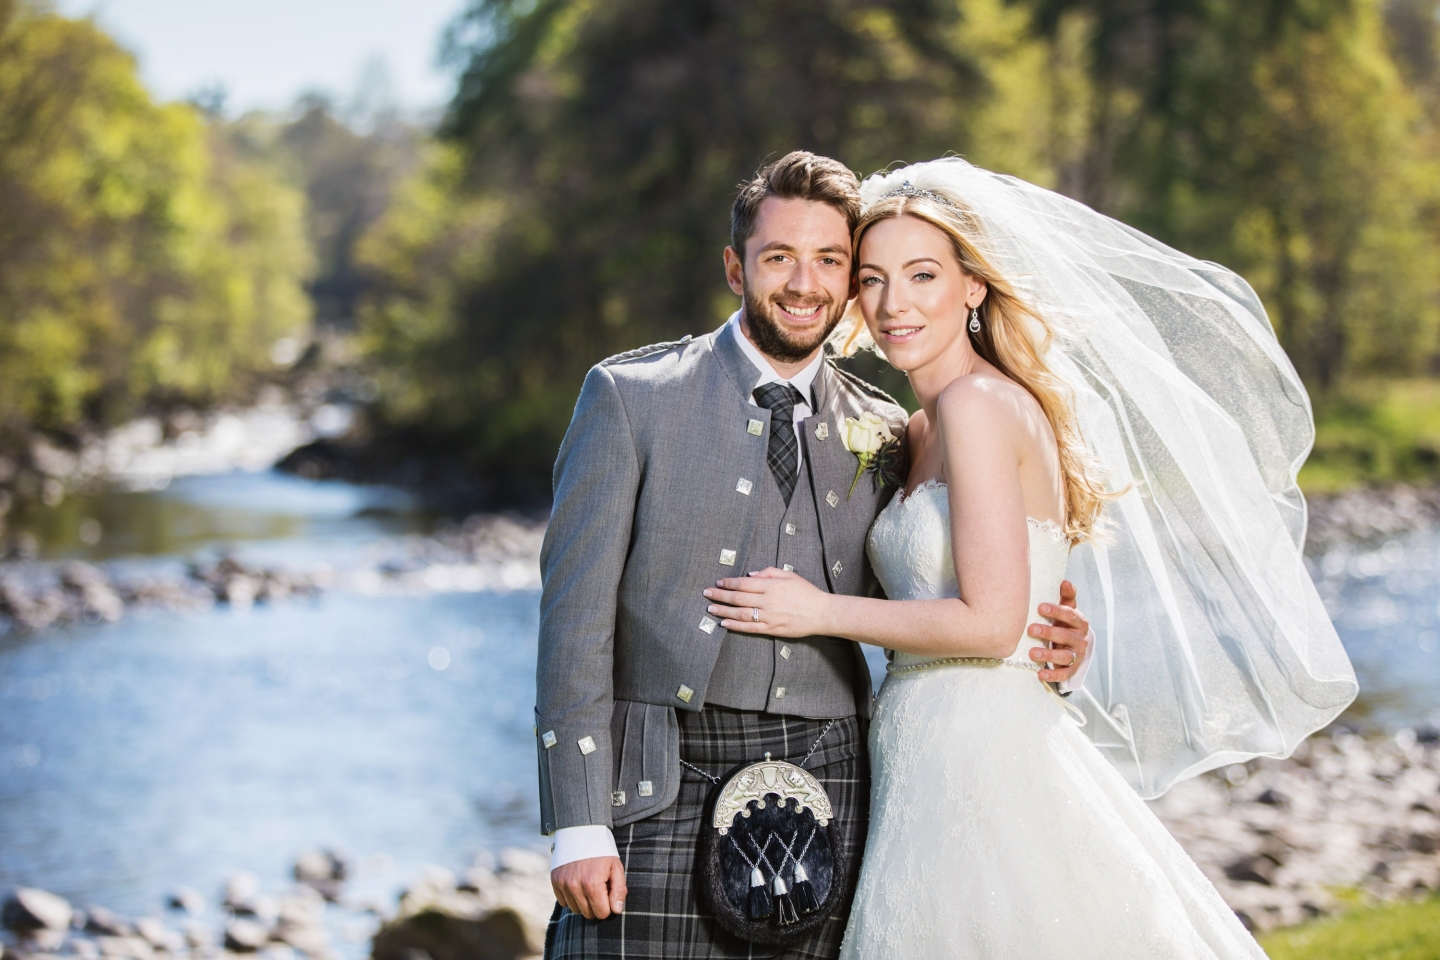 A creative couple photograph taken at a wedding in Aberdeen by Jonathan Addie, an Aberdeen based wedding photographer